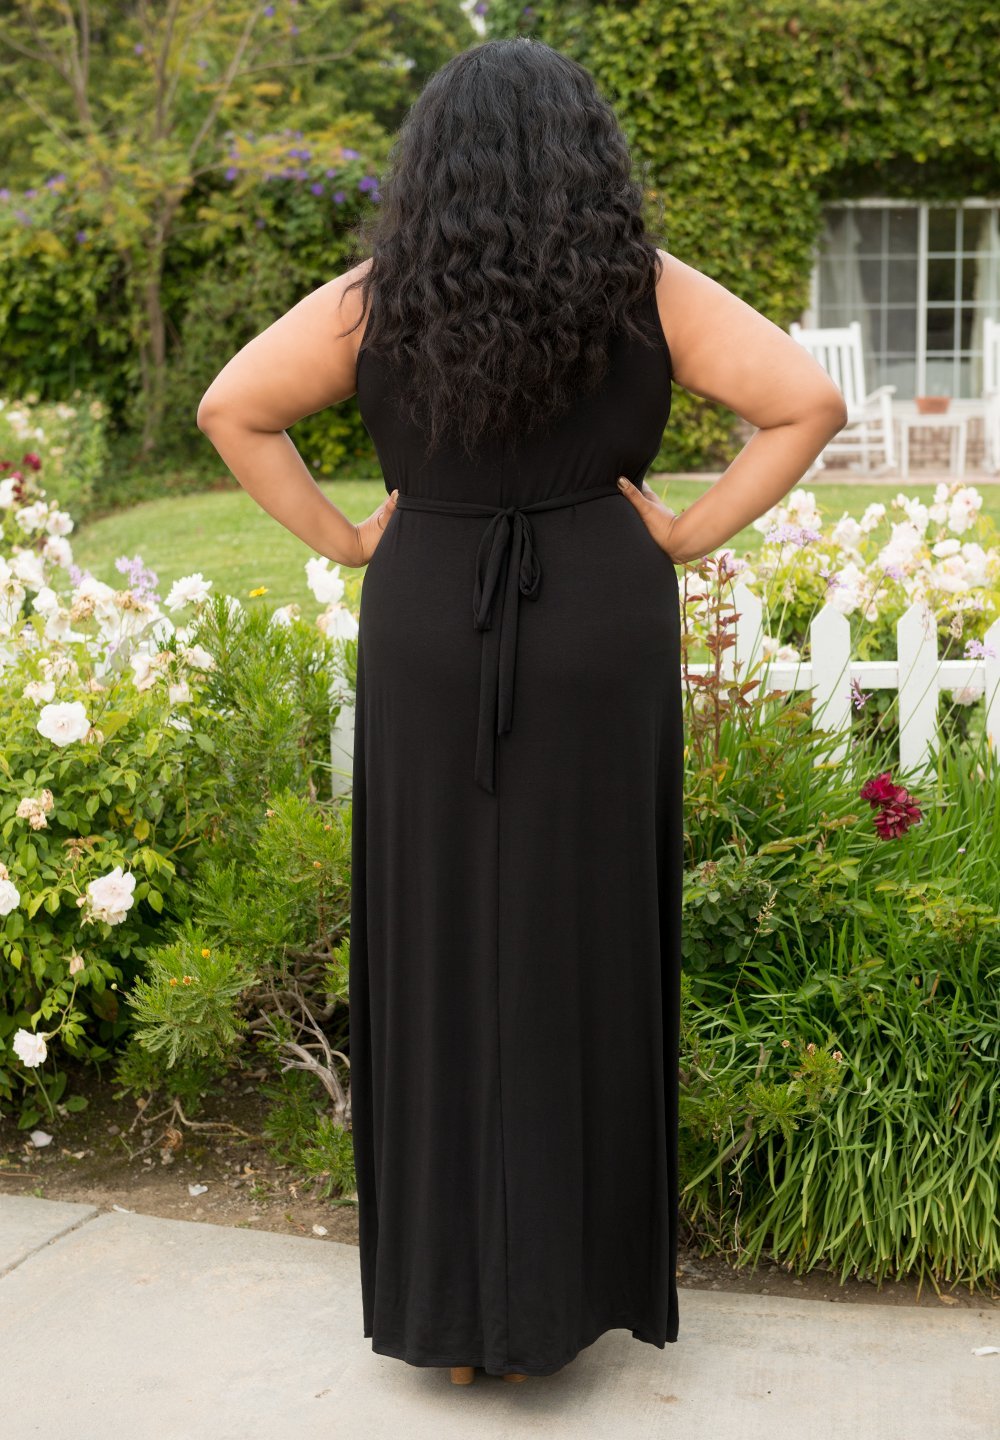 Bonnie Classic Black Maxi Dress - Plus Size, Empire Waist, and Waist Ties